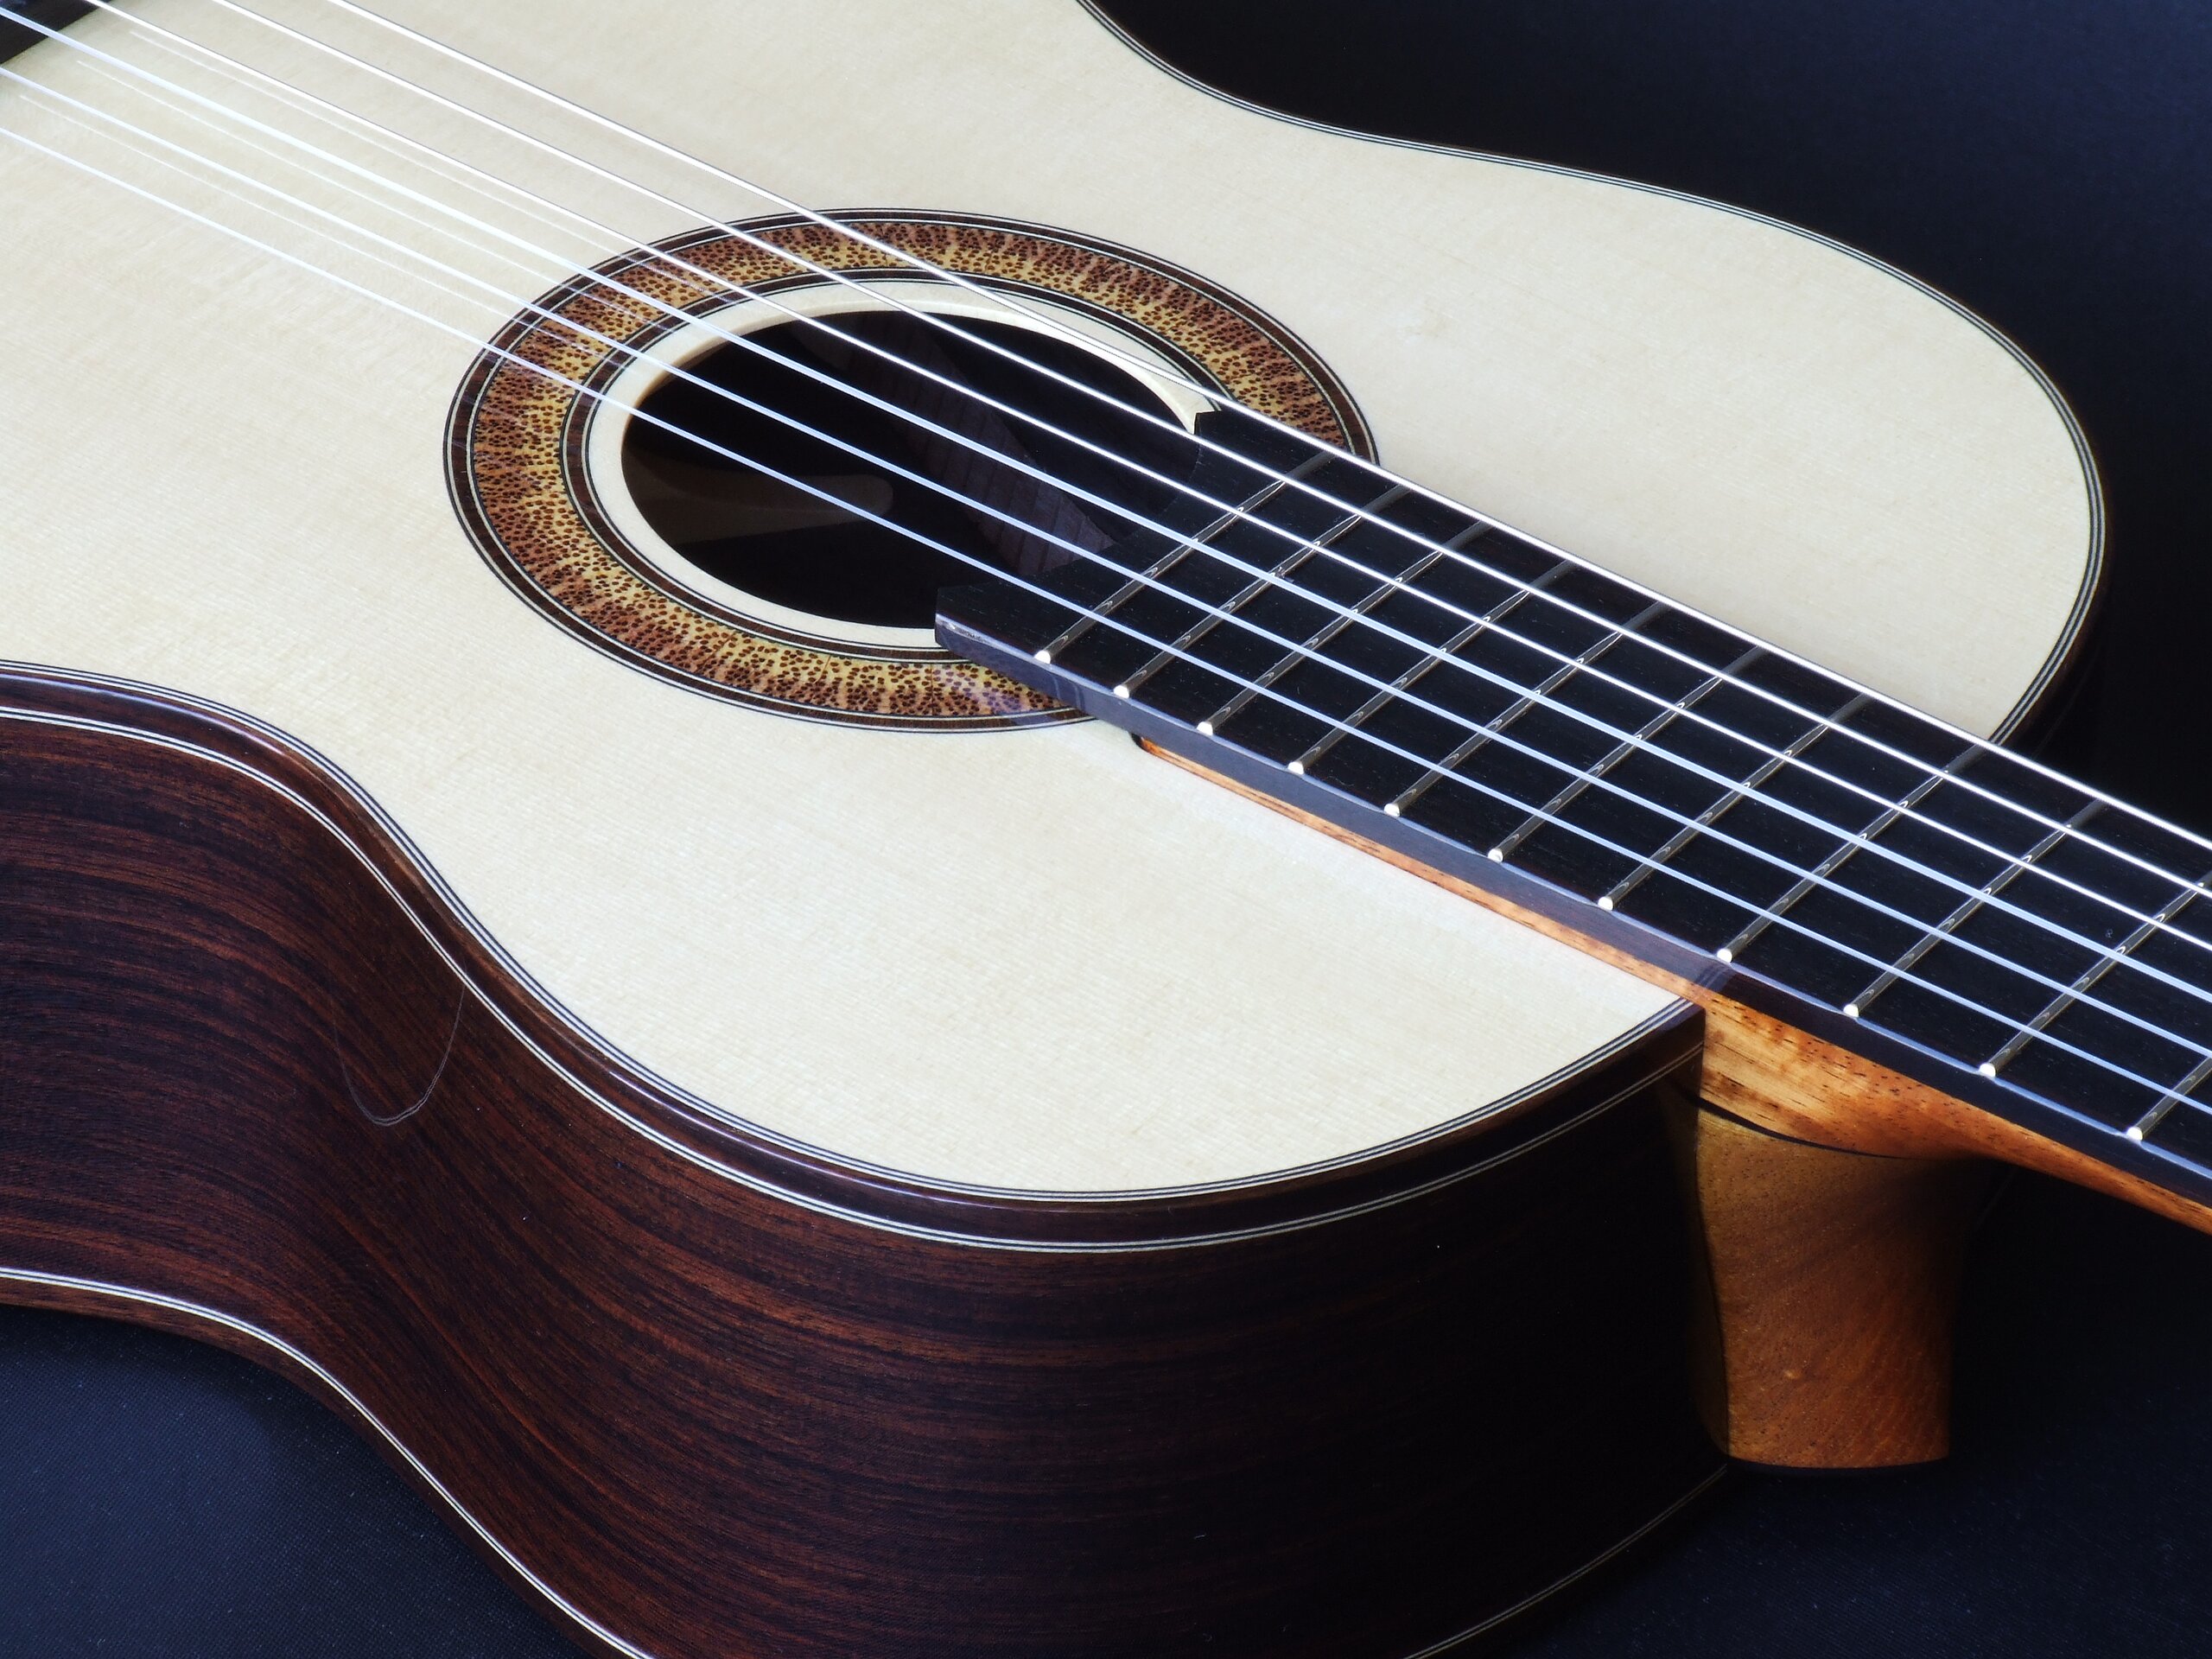 Custom guitars. Natural sunburst rosette and ebony fretboard on a classical guitar